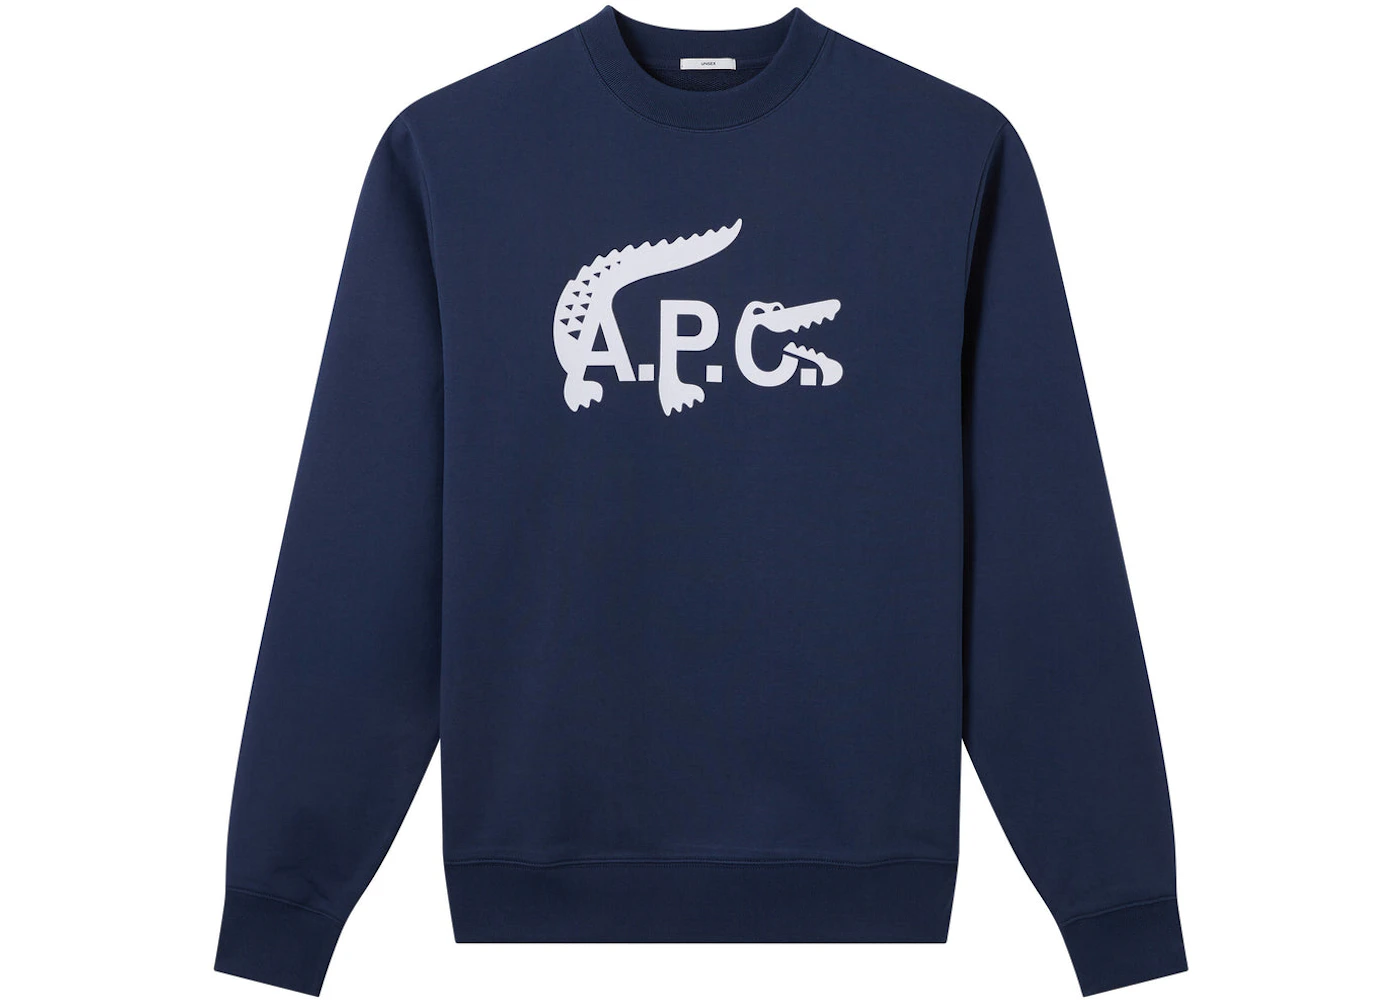 A.P.C. x Lacoste Sweatshirt Navy Blue - SS22 - US